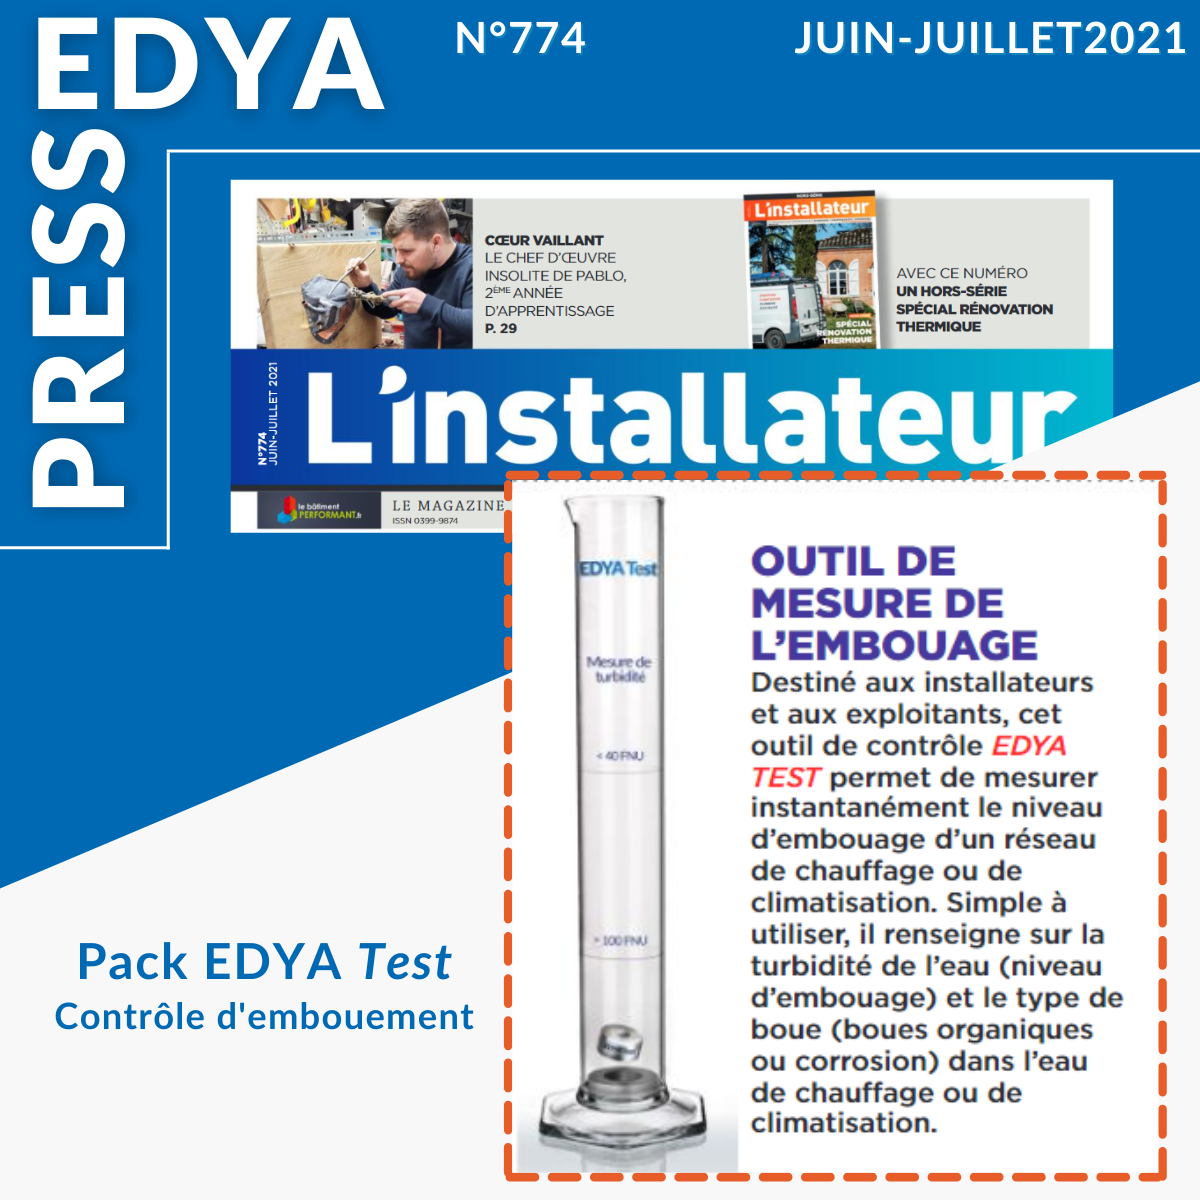 Article L'installateur : EDYA Test